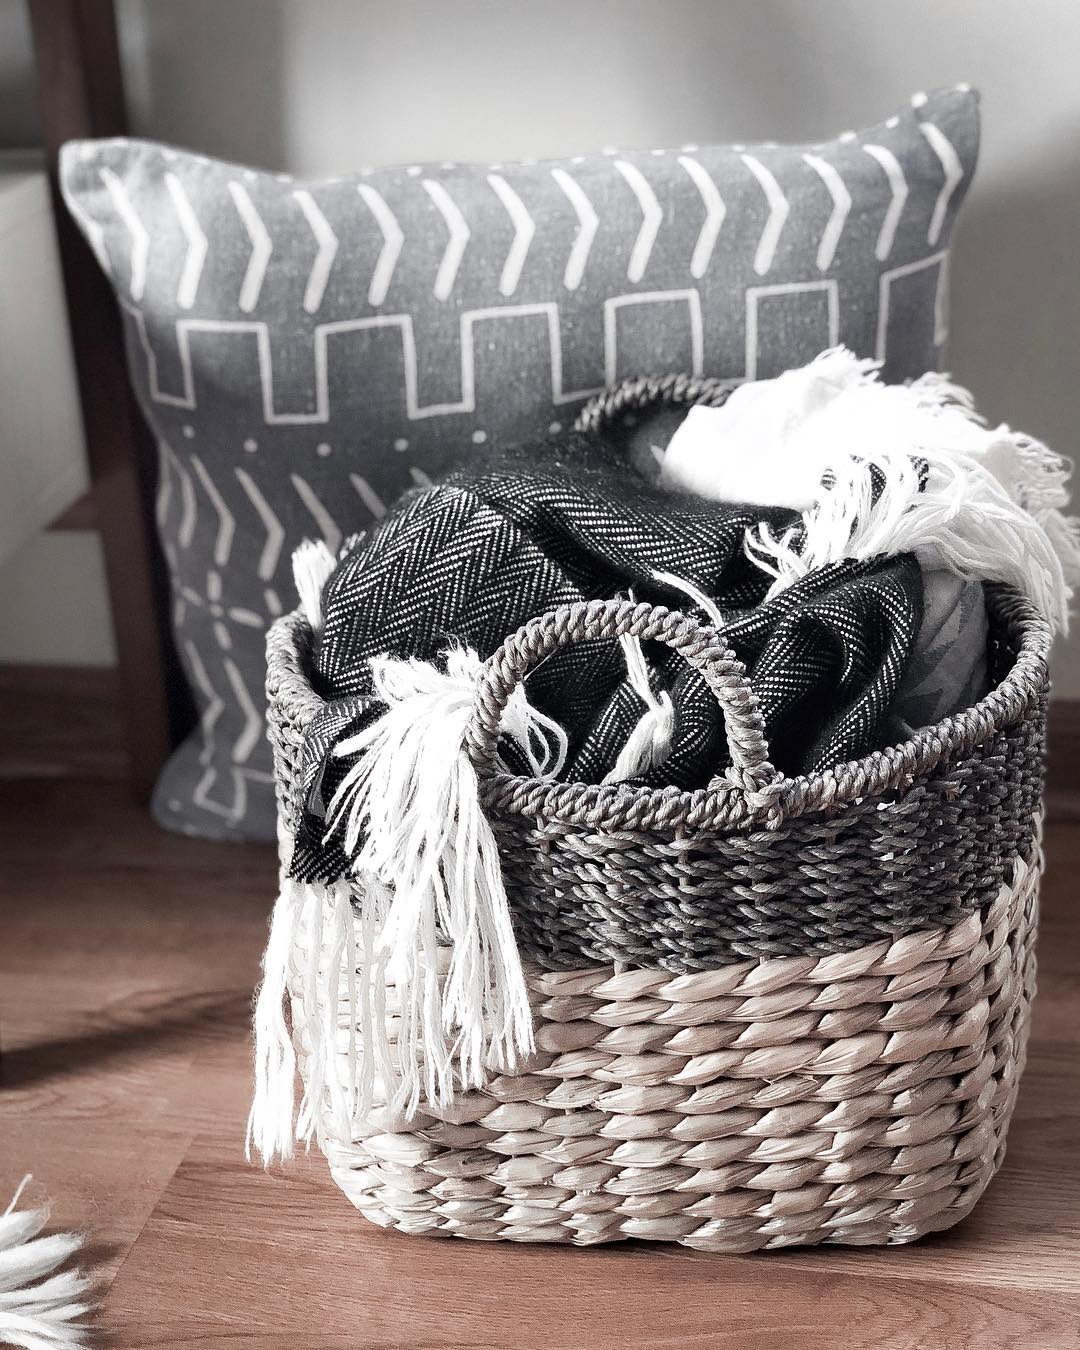 Wicker basket for blanket storage. Photo by Instagram user @isadayana